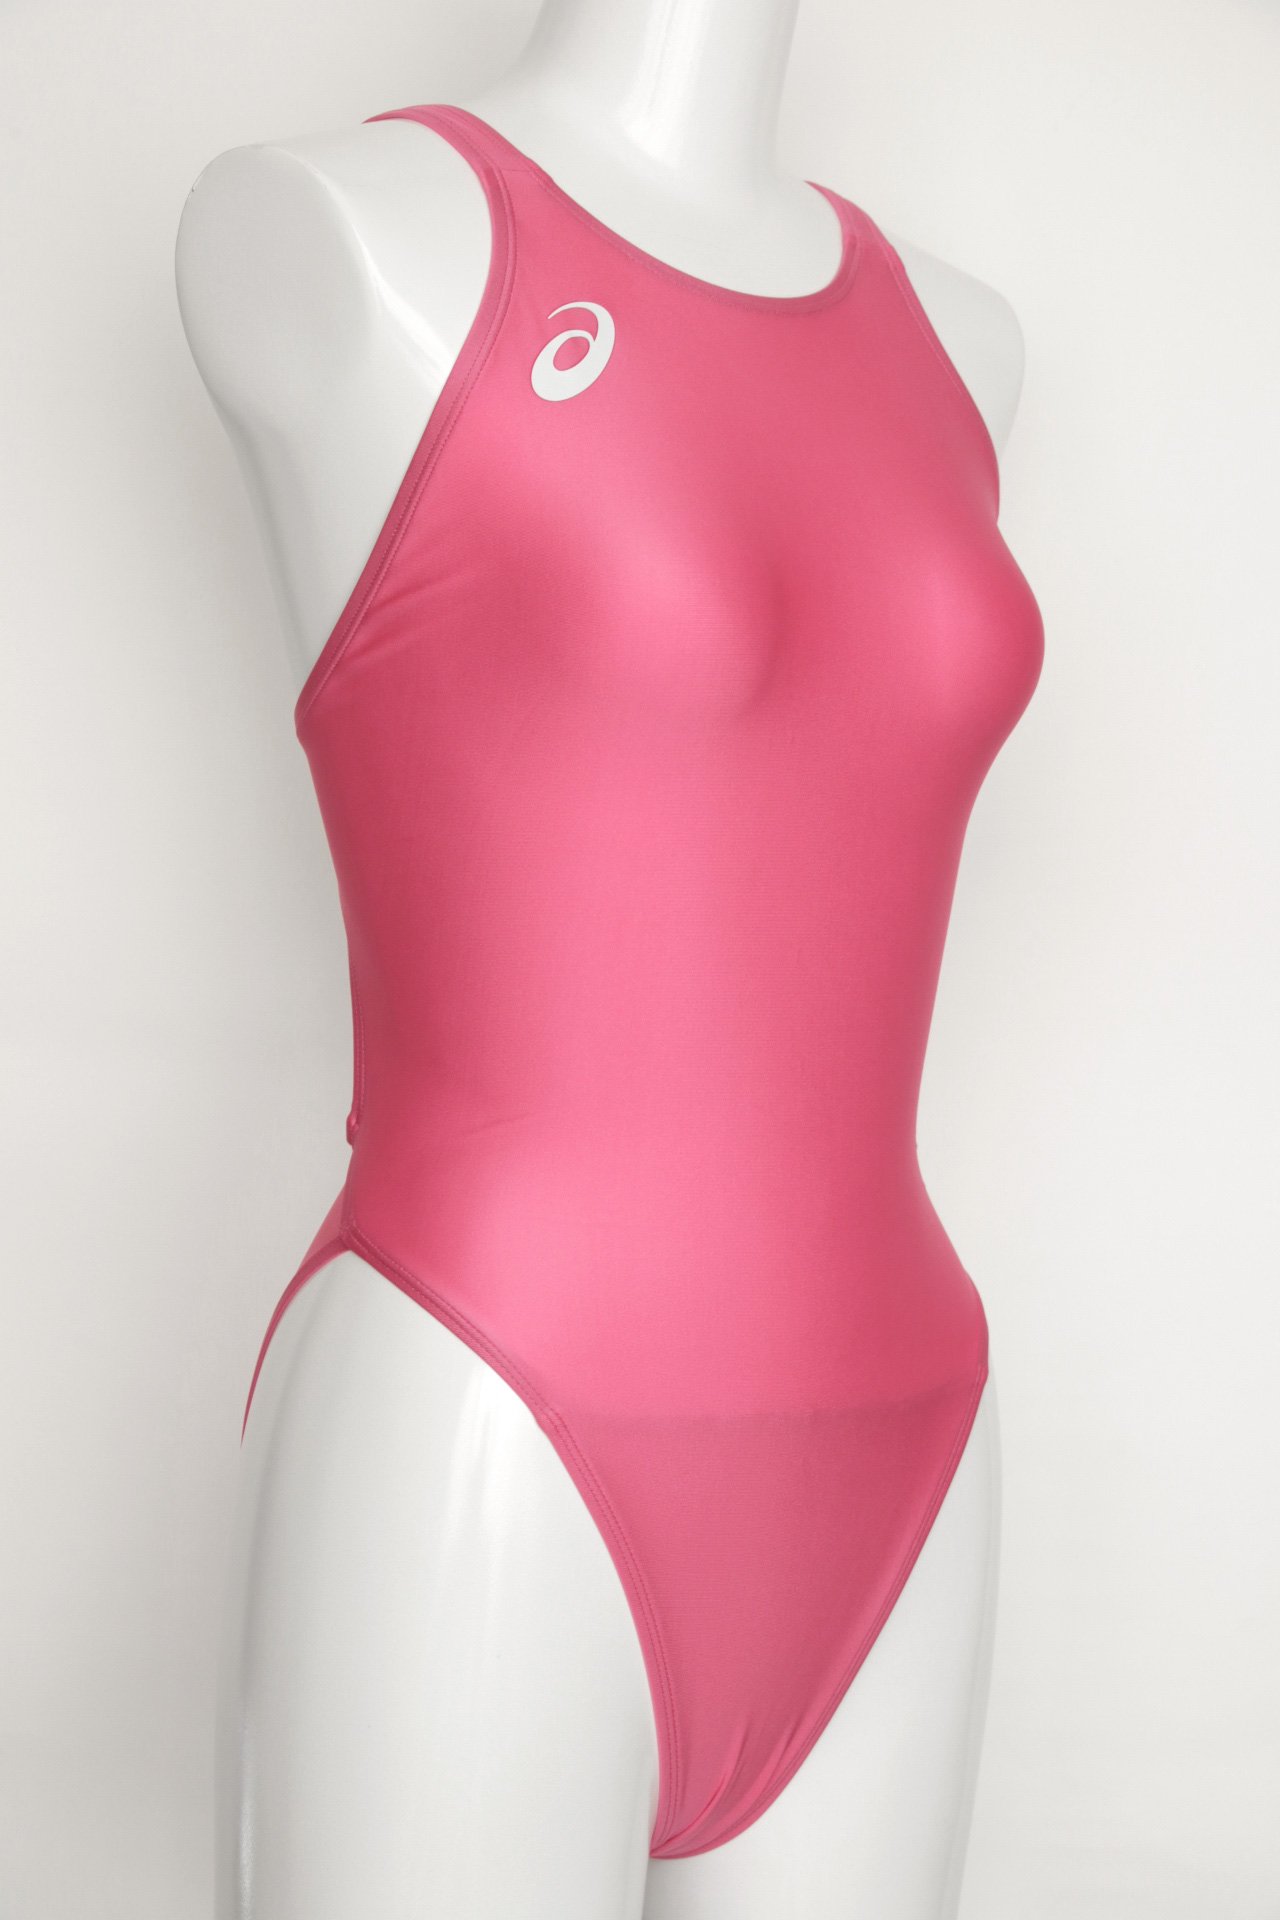 Bespoke Asics Lady's Competition Swimwear Successor to HYDRO-CD High Leg Cut Pink